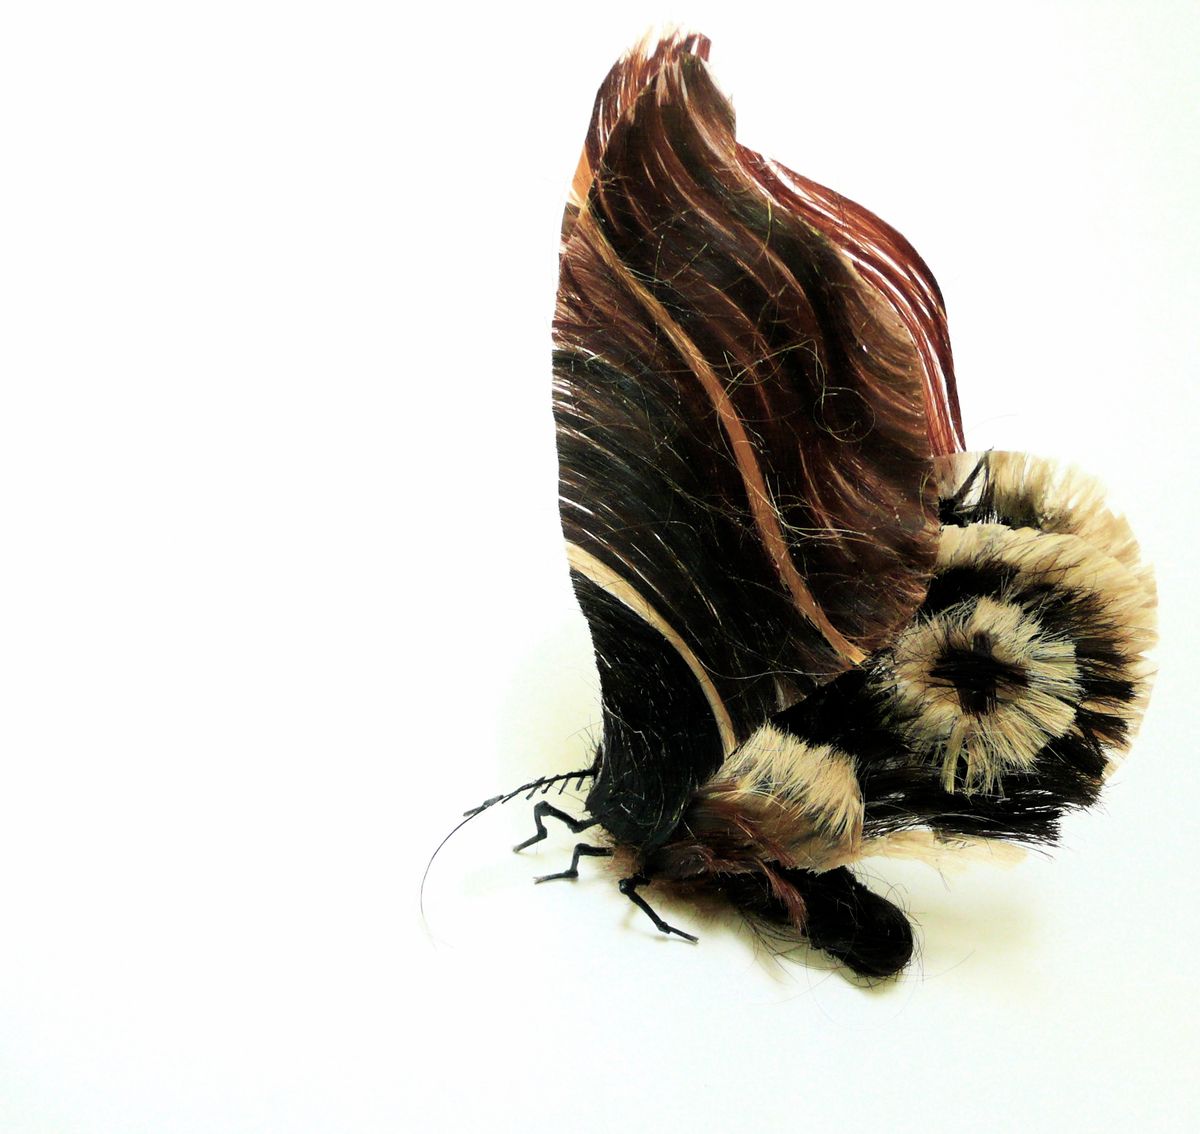 A moth made from human hair and glue. (Artist: Adrienne Antonson)